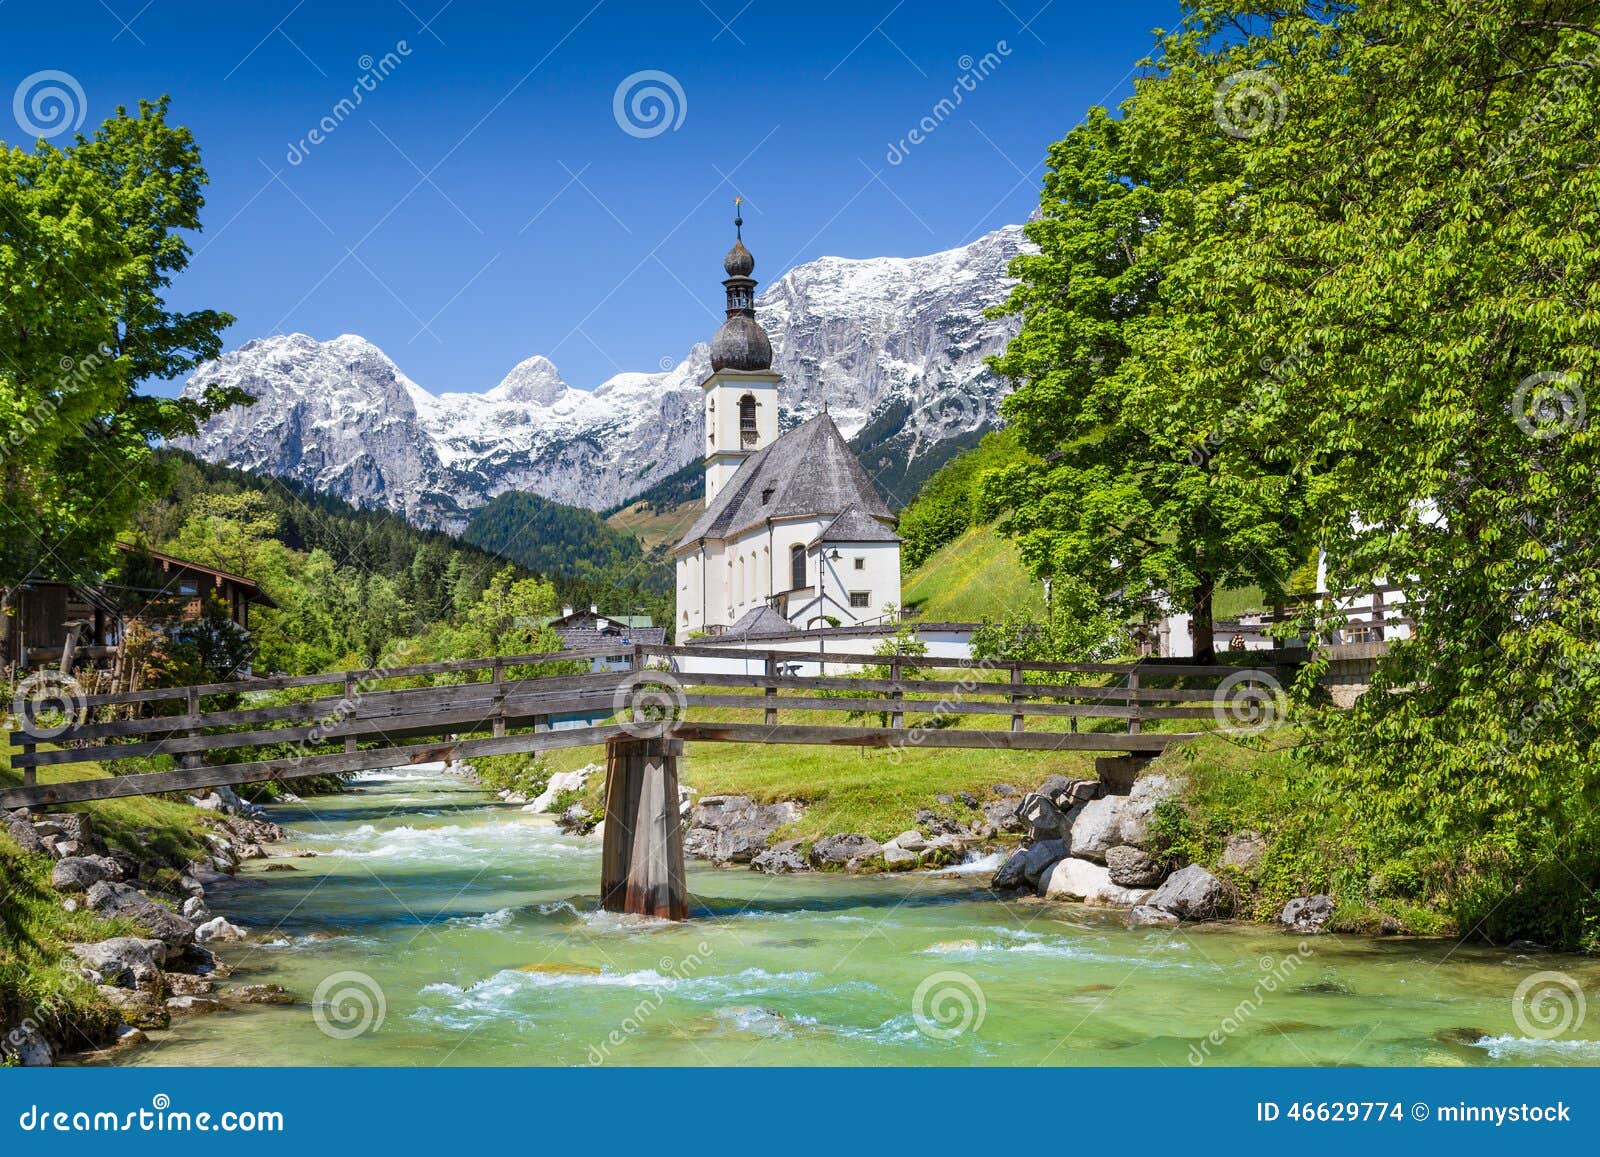 ramsau, berchtesgadener land, bavaria, germany